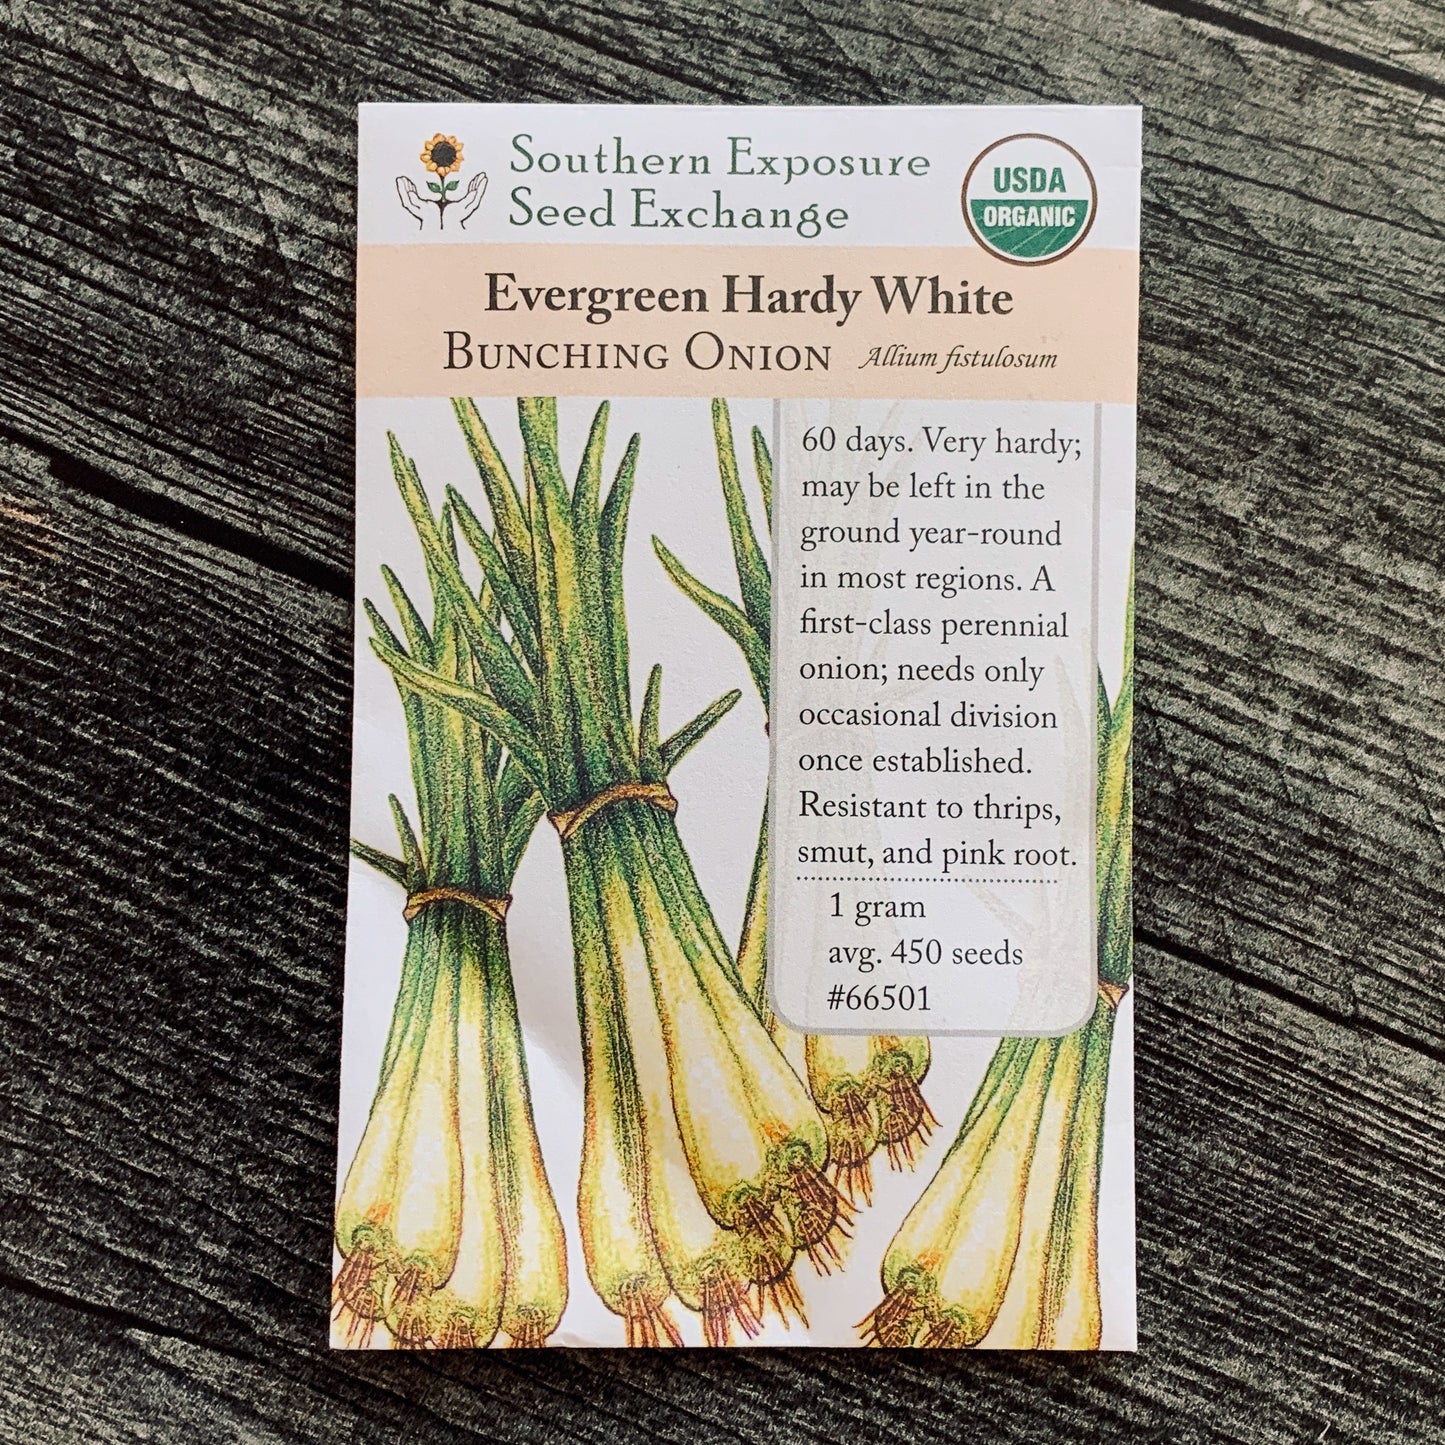 Evergreen Hardy White Scallions